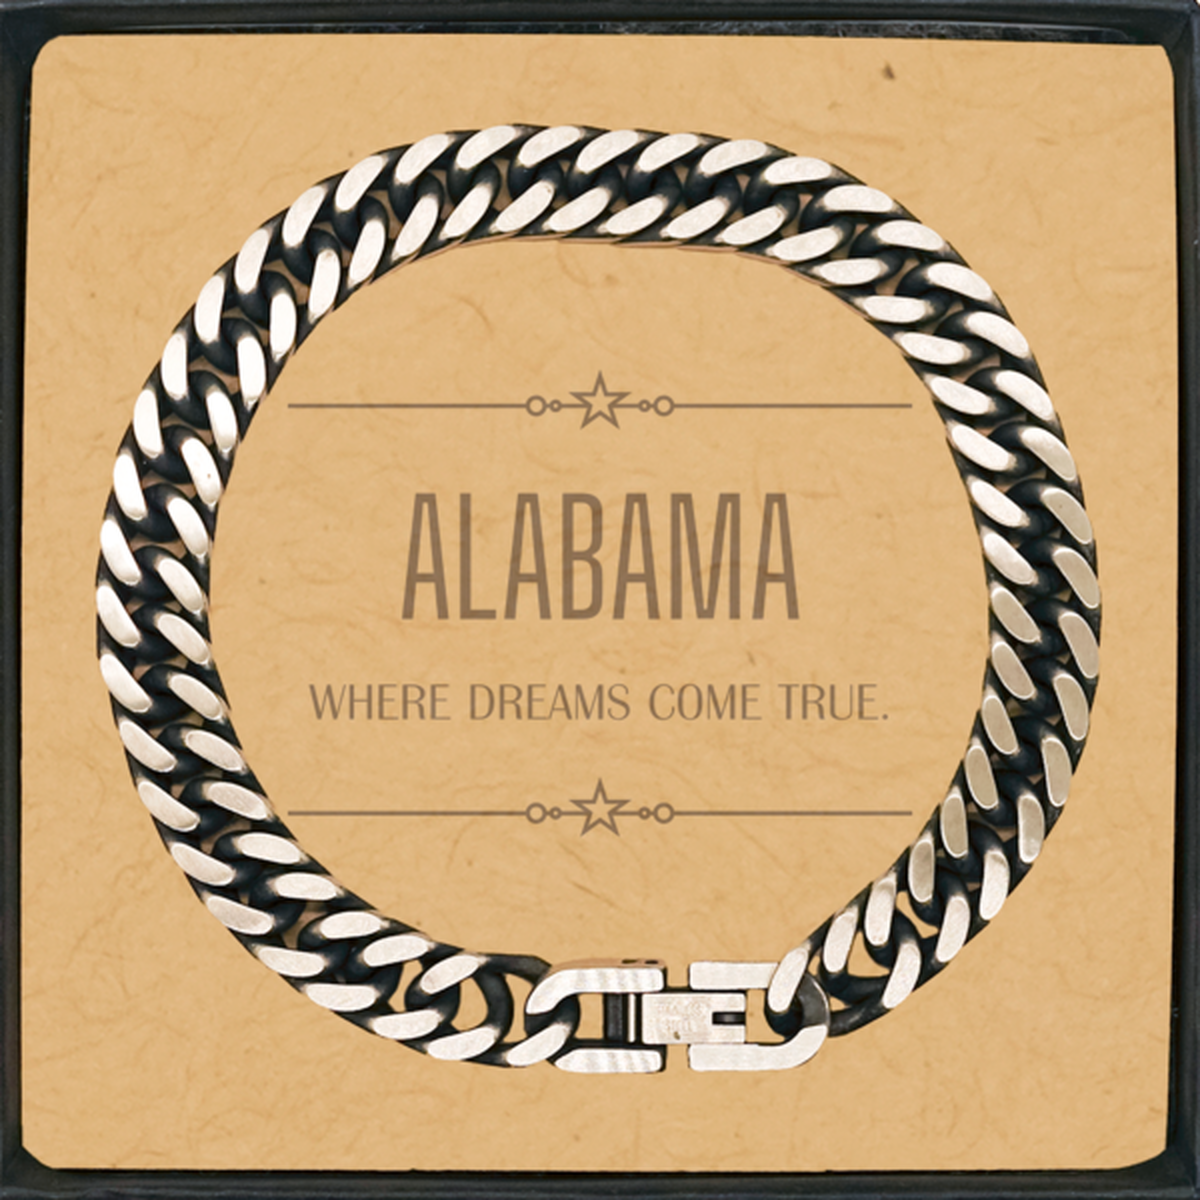 Love Alabama State Cuban Link Chain Bracelet, Alabama Where dreams come true, Birthday Inspirational Gifts For Alabama Men, Women, Friends